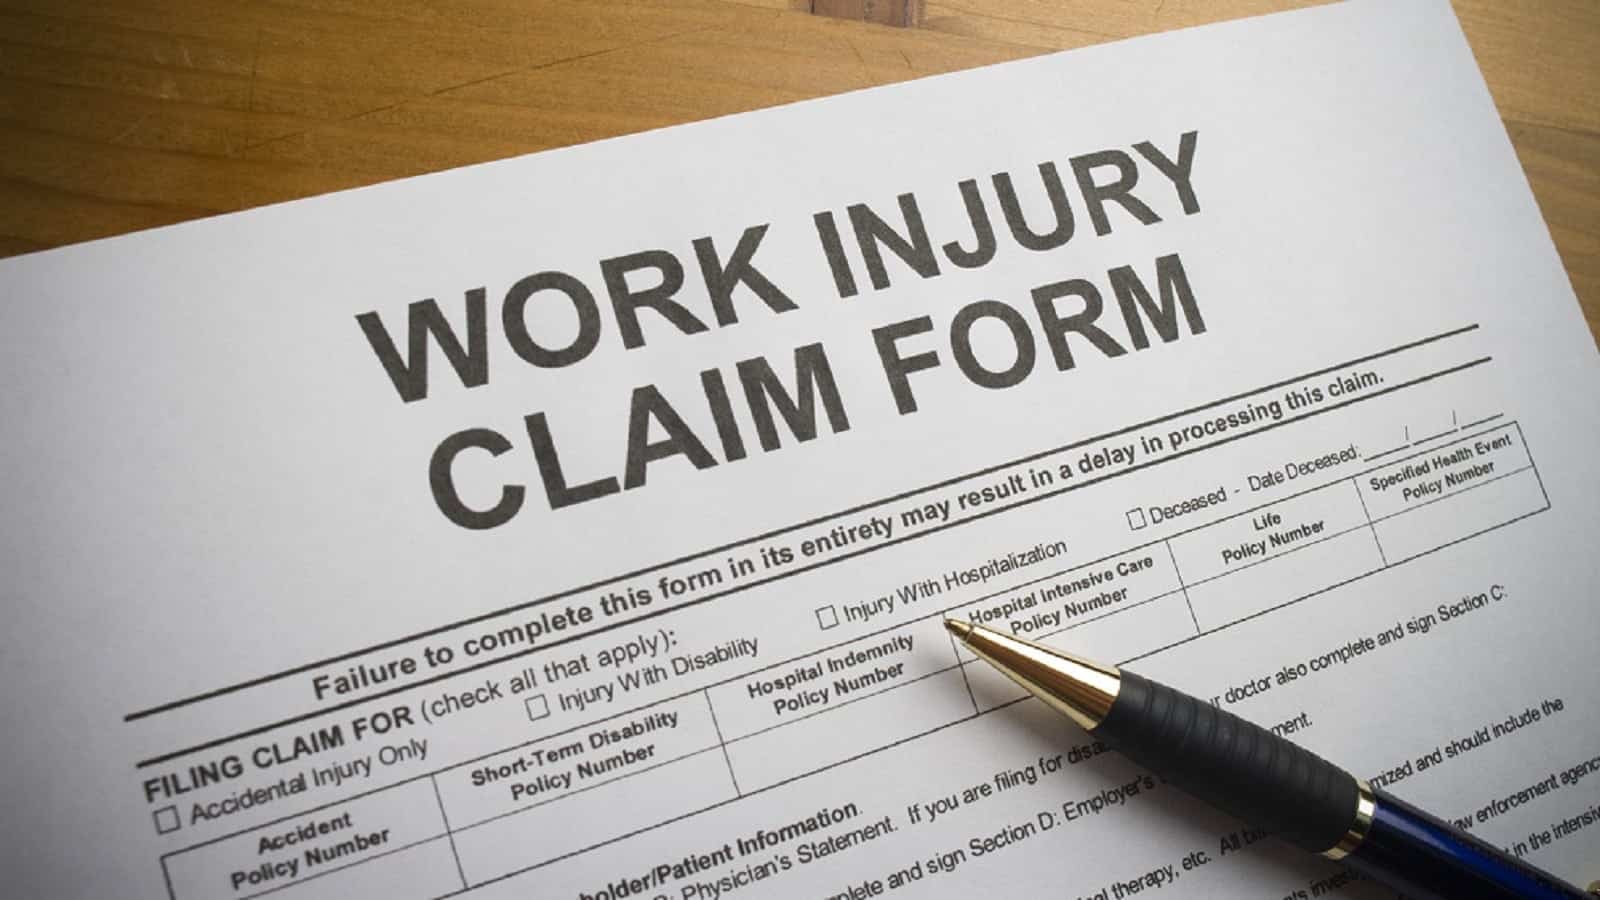 Work Injury claim form